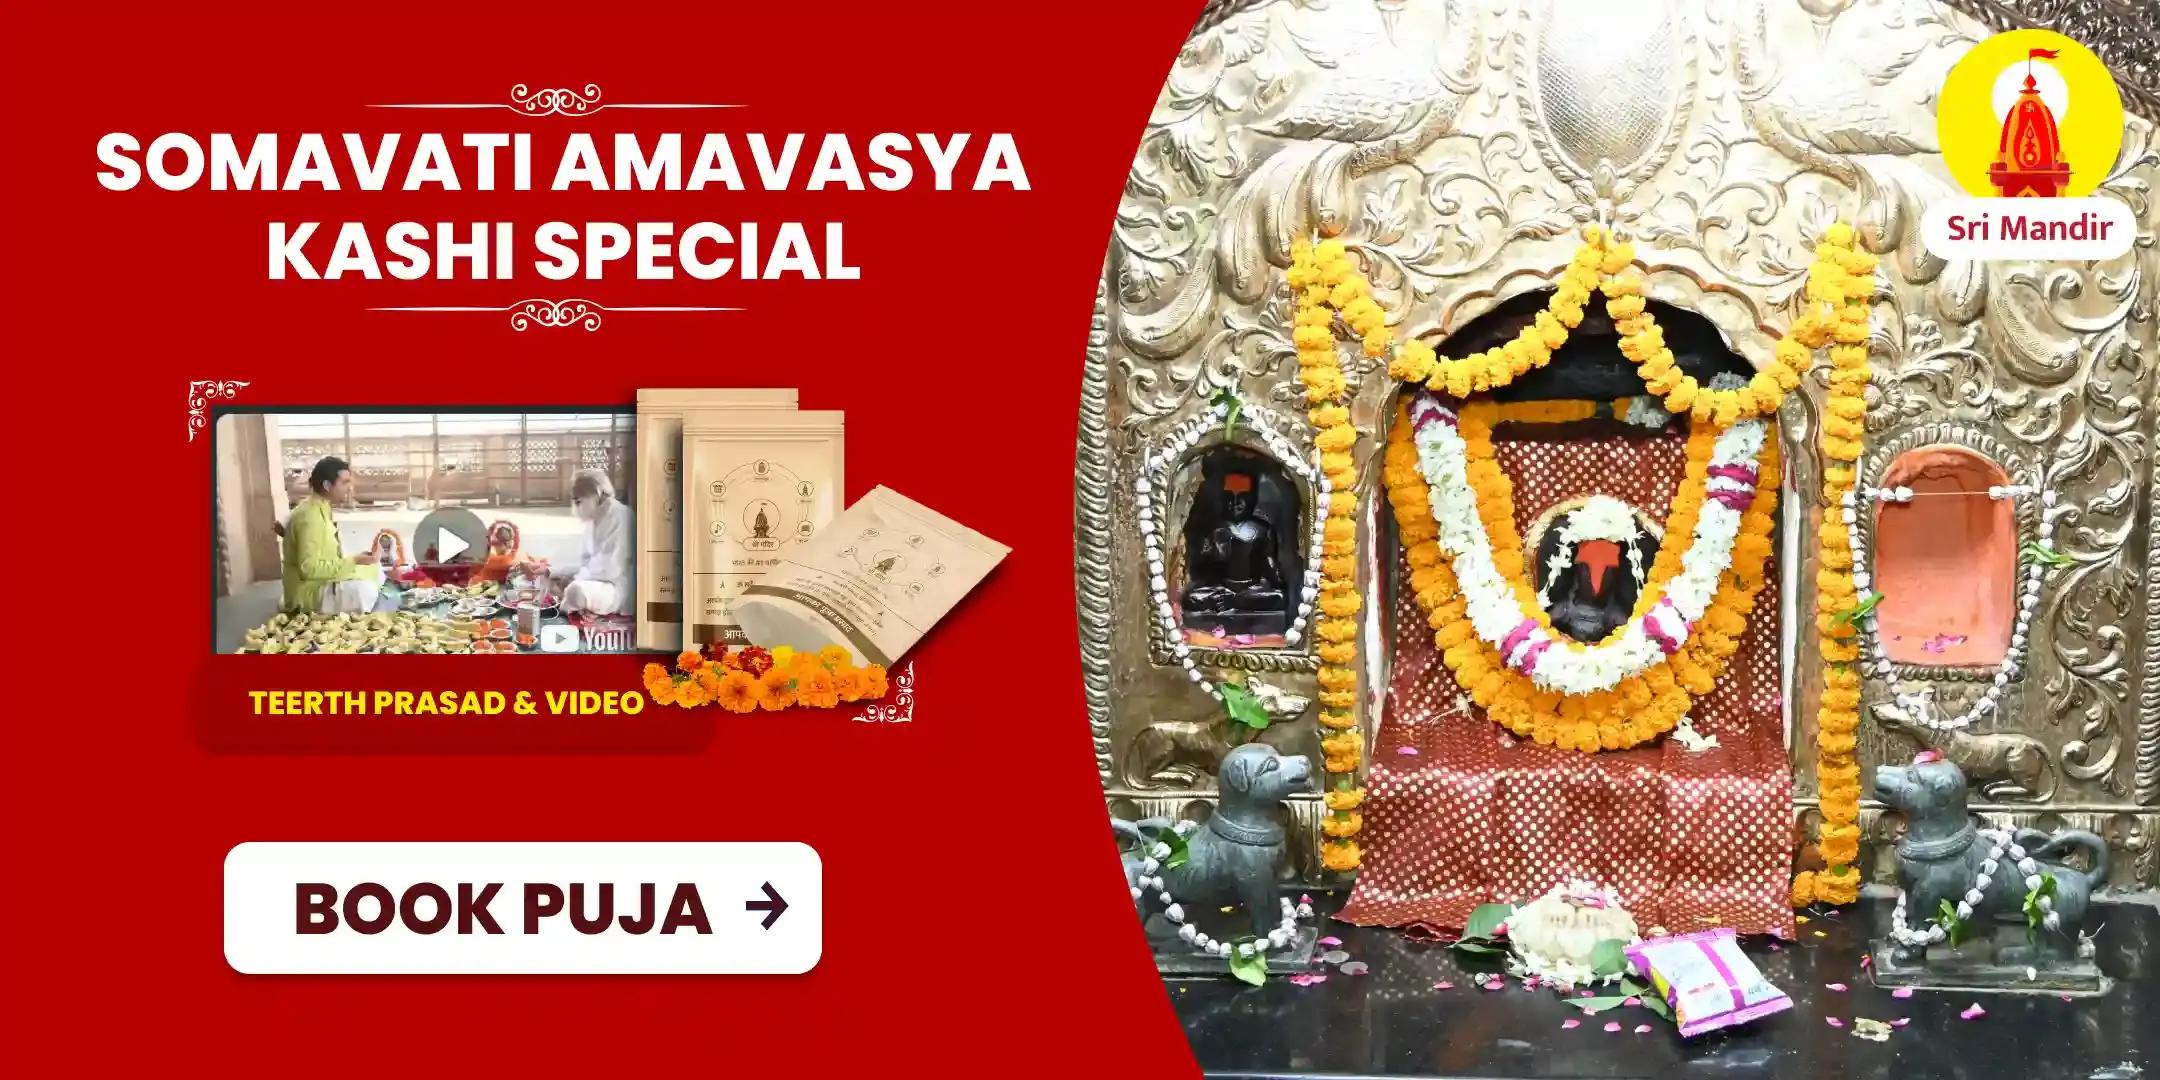 Somavati Amavasya Kashi Special Kal Bhairav Tantra Yukta Mahayagya for Overcoming Fear and Attaining Courage